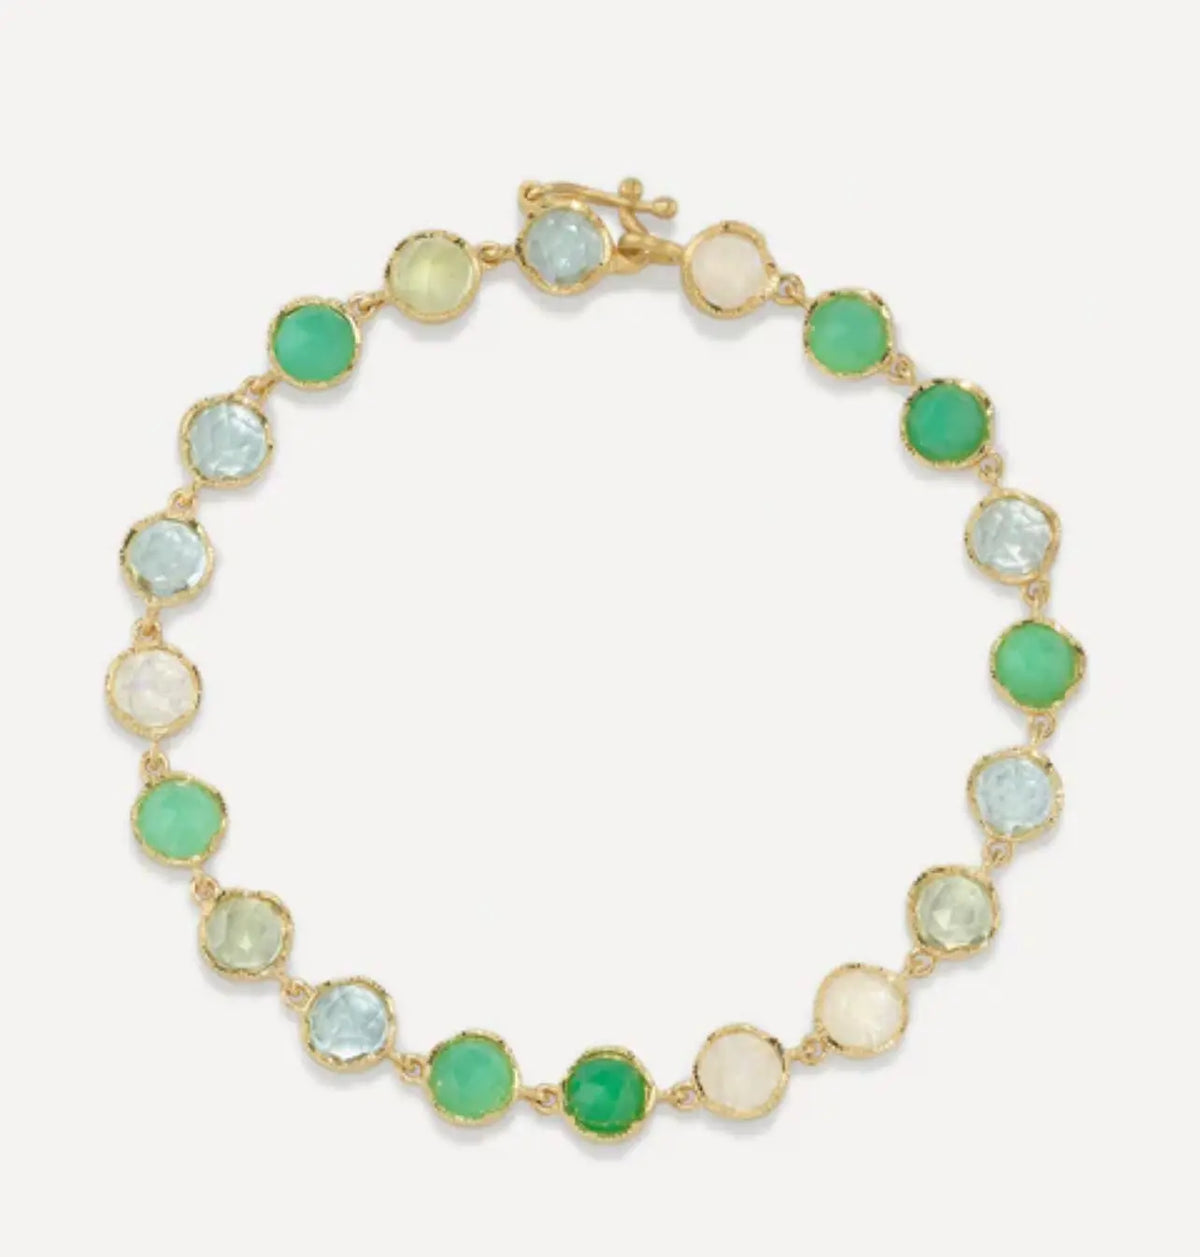 Small classic aquamarine, chrysoprase, prehnite and rainbow moonstone bracelet. Irene Neuwirth